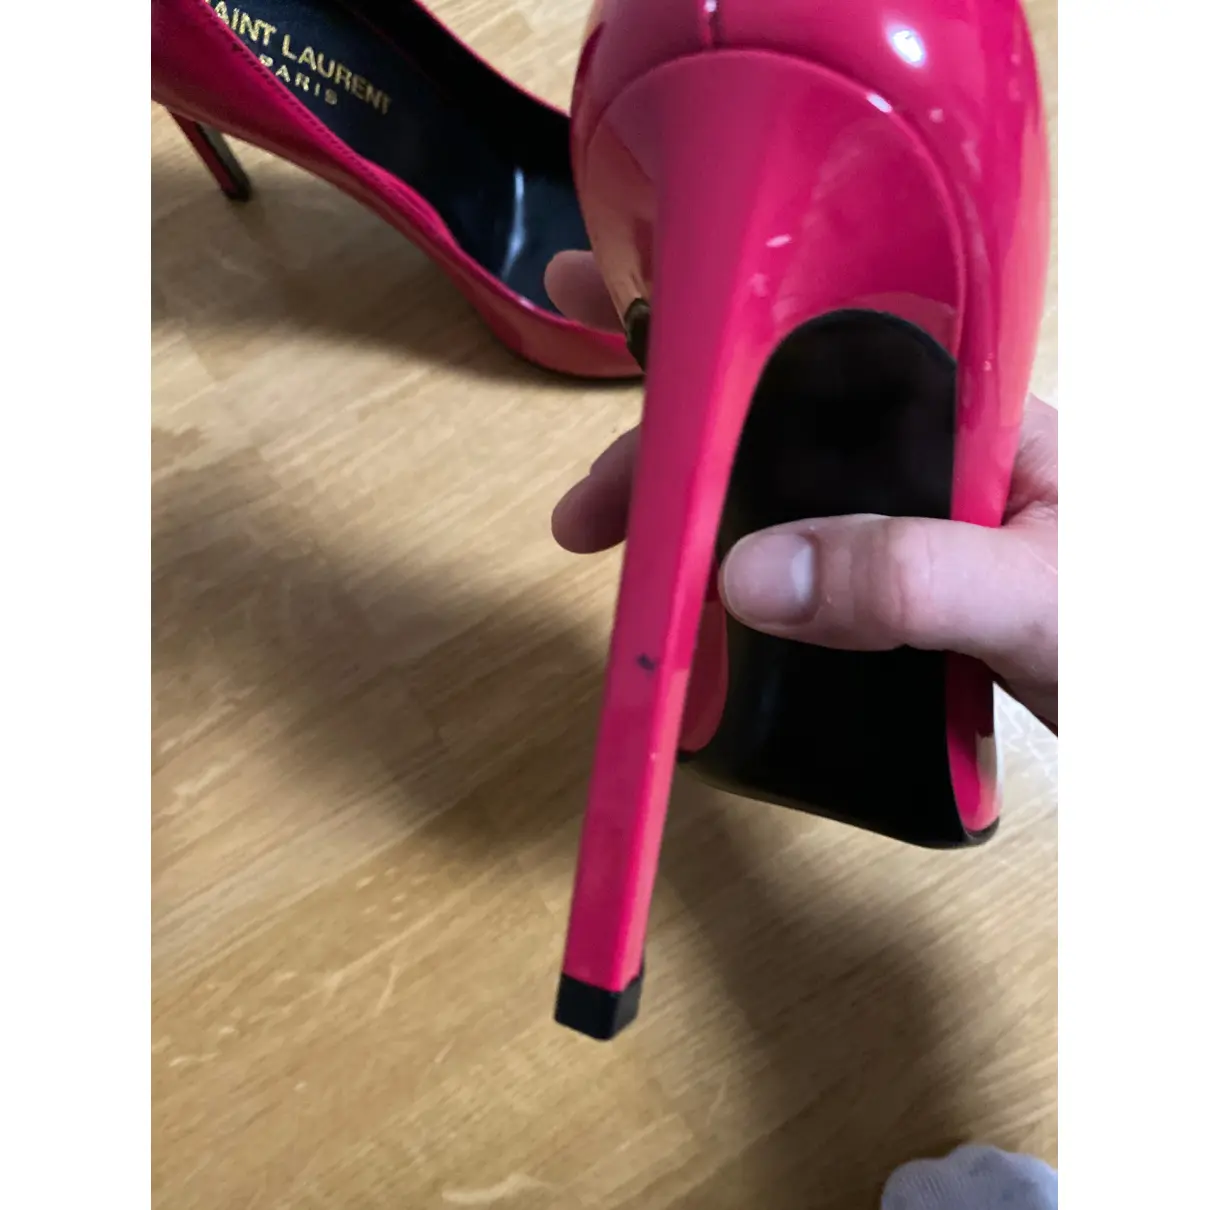 Zoe patent leather heels Saint Laurent